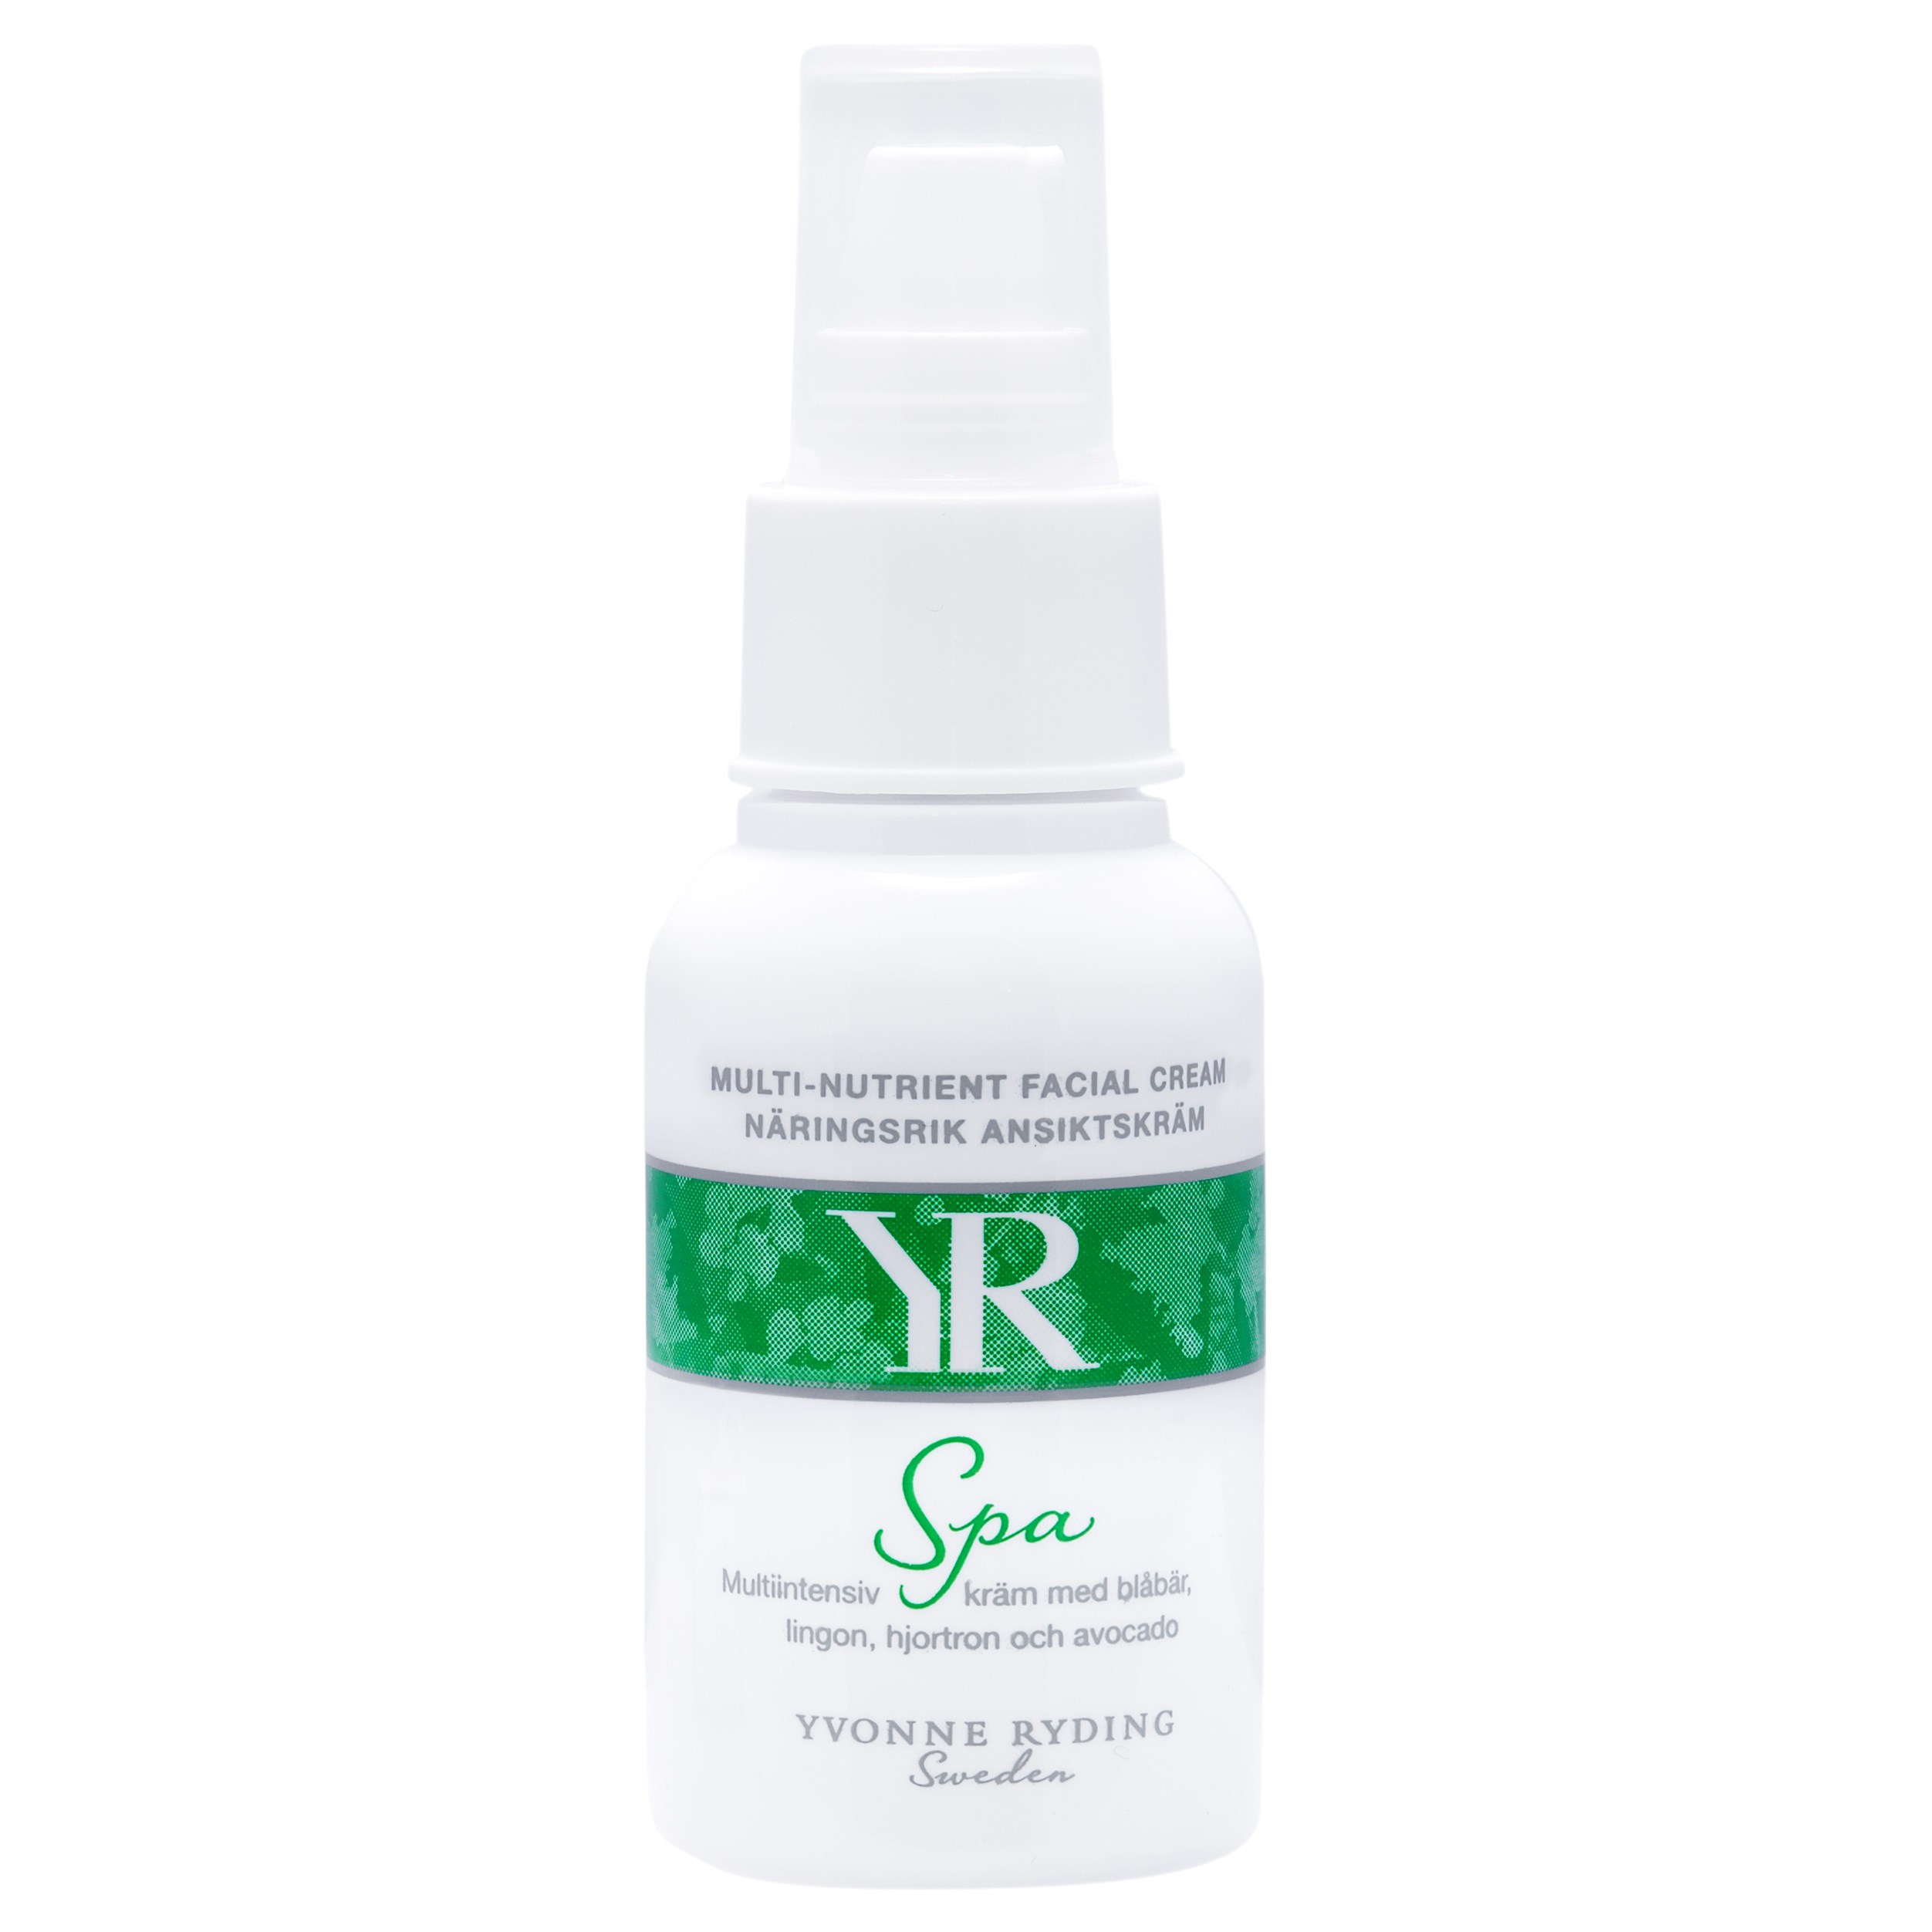 Yvonne Ryding SPA Multi Nutrient Facial Cream 60 ml